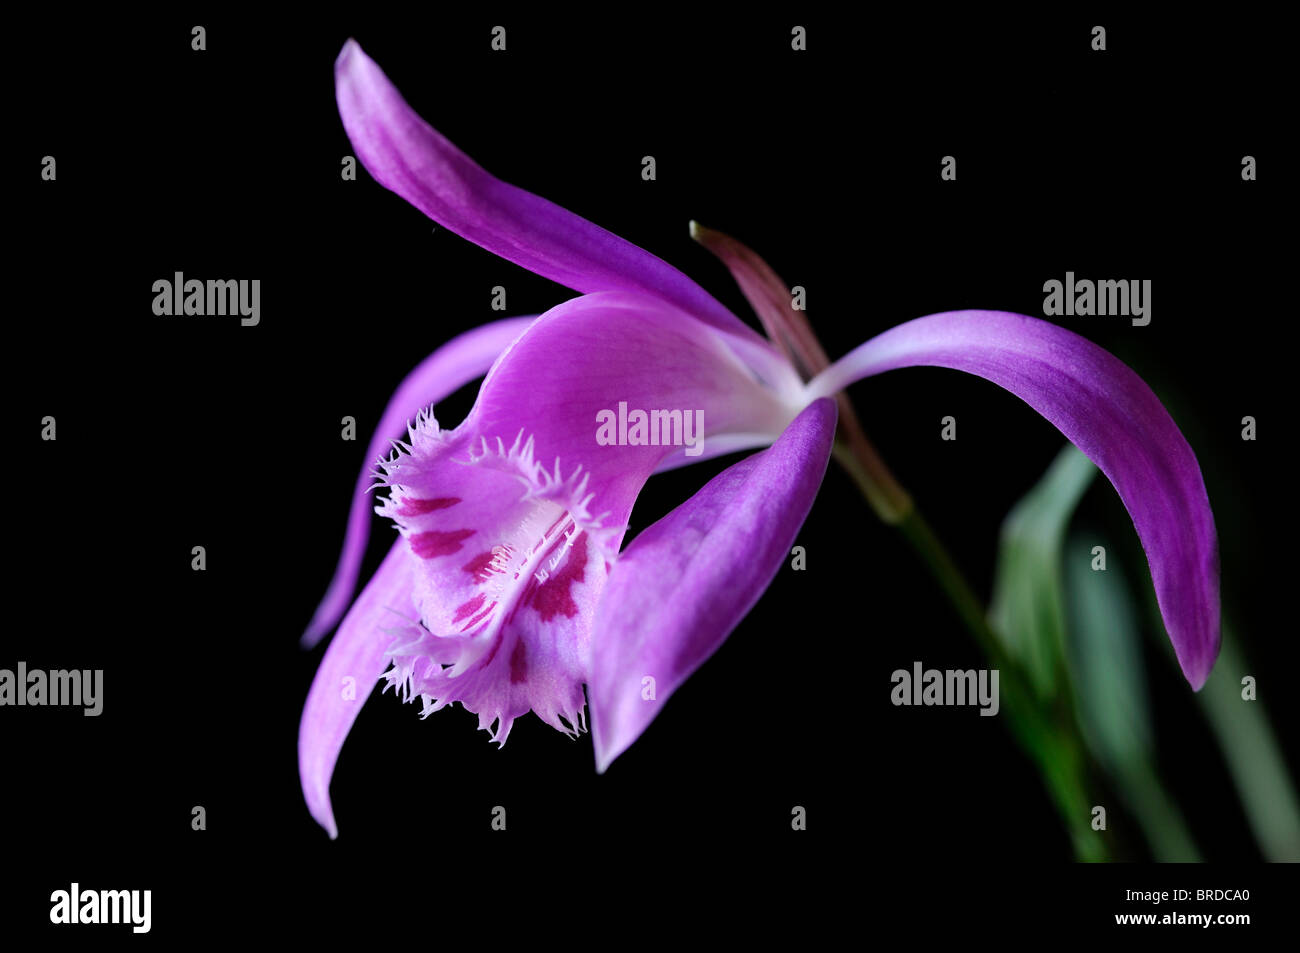 Pleione formosana purple windowsill orchid flower plant set contrast contrasted black background Stock Photo